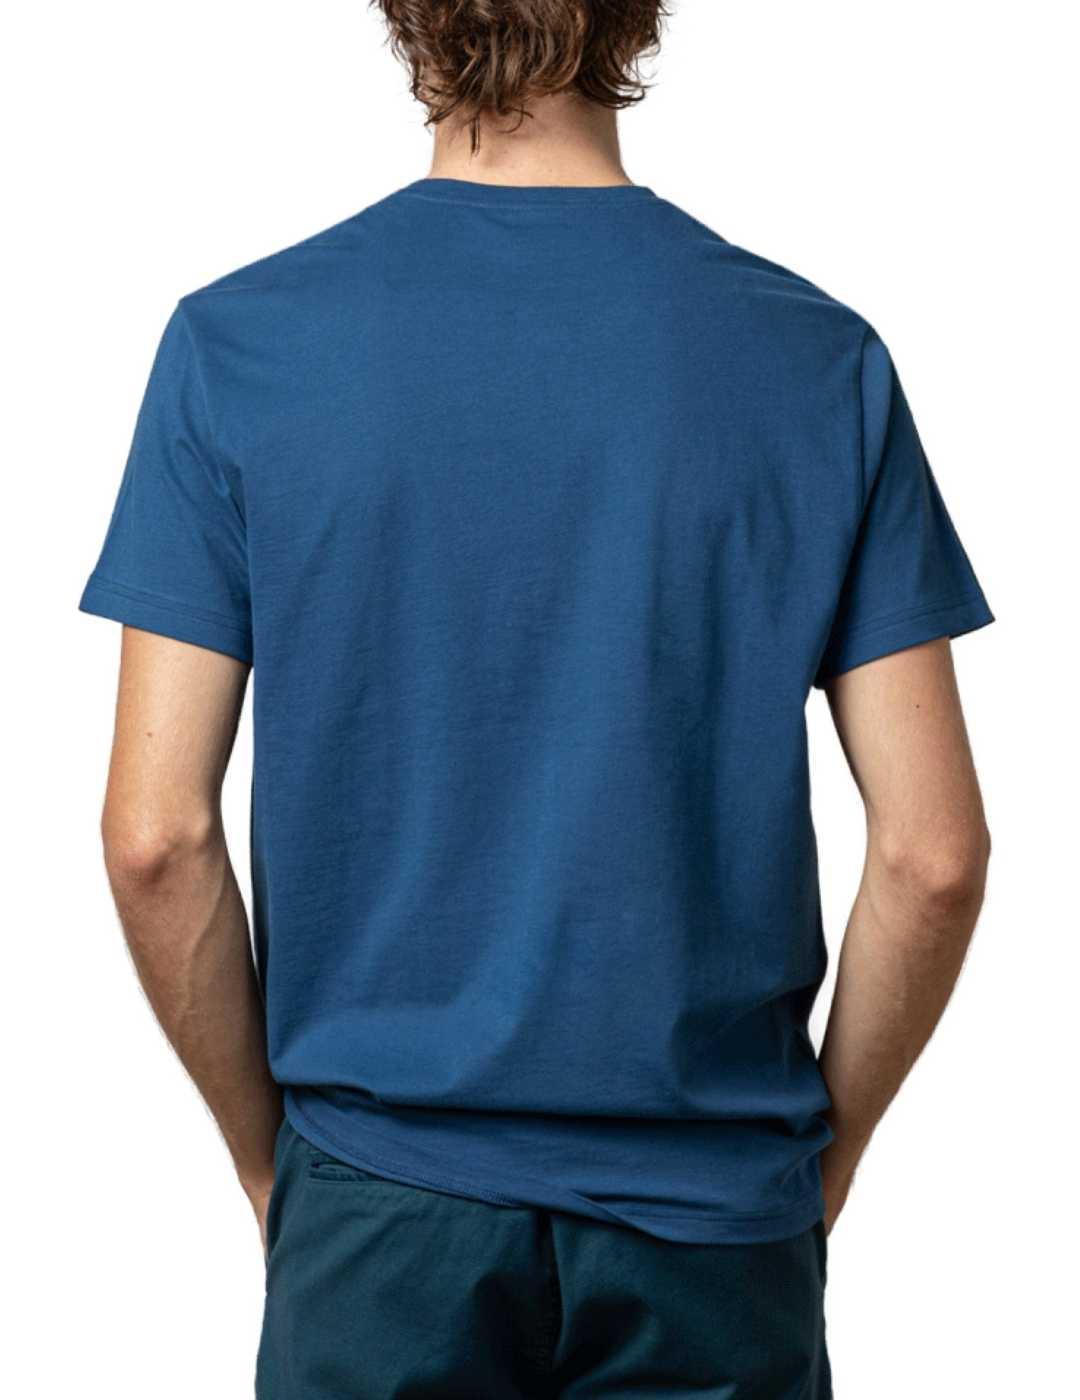 Camiseta Scotta Moto tour marino manga corta para hombre